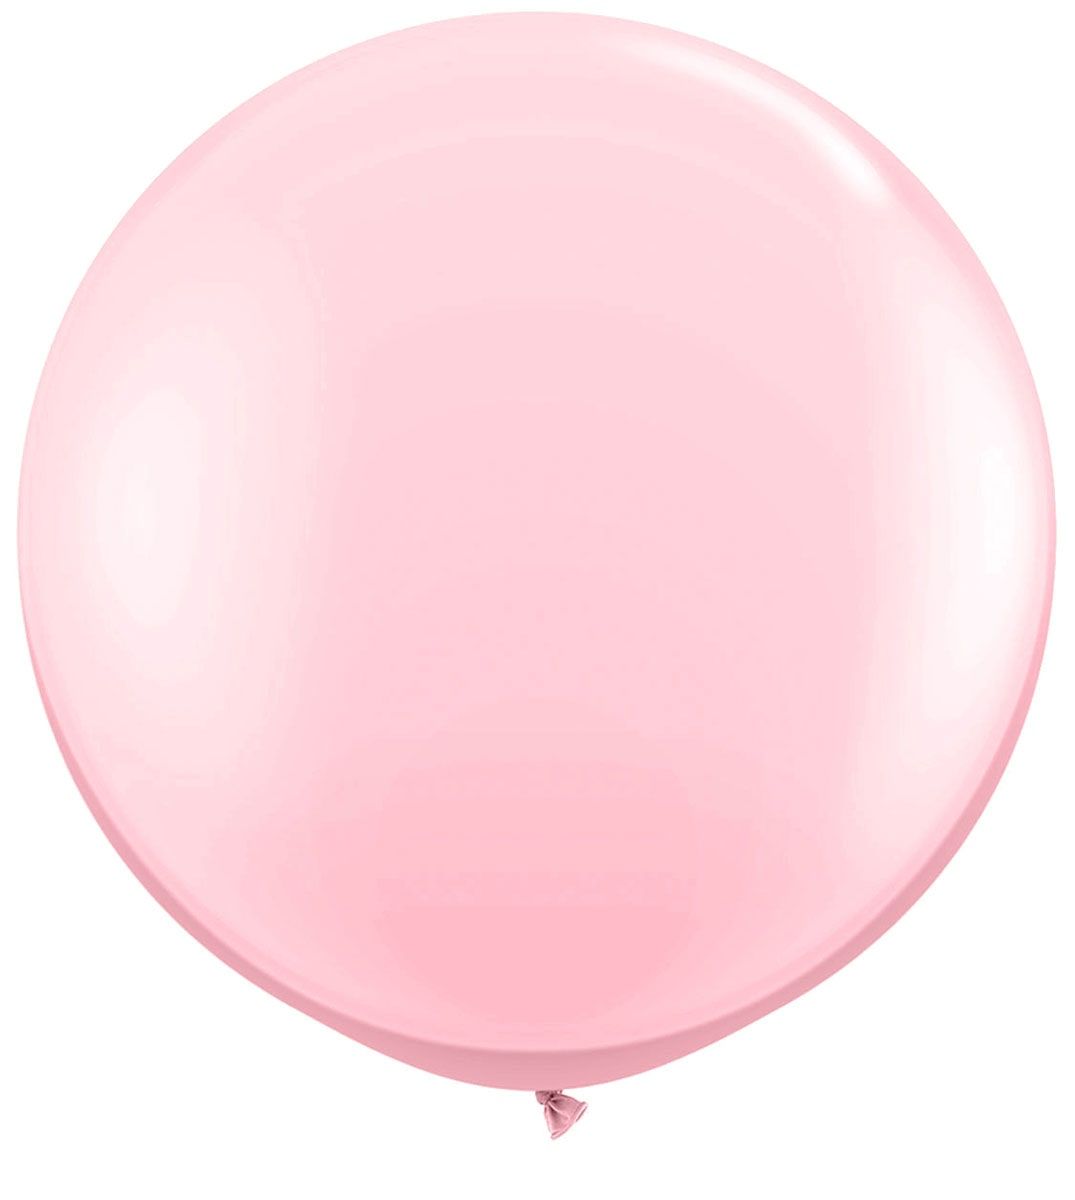 XL ballon roze 90cm